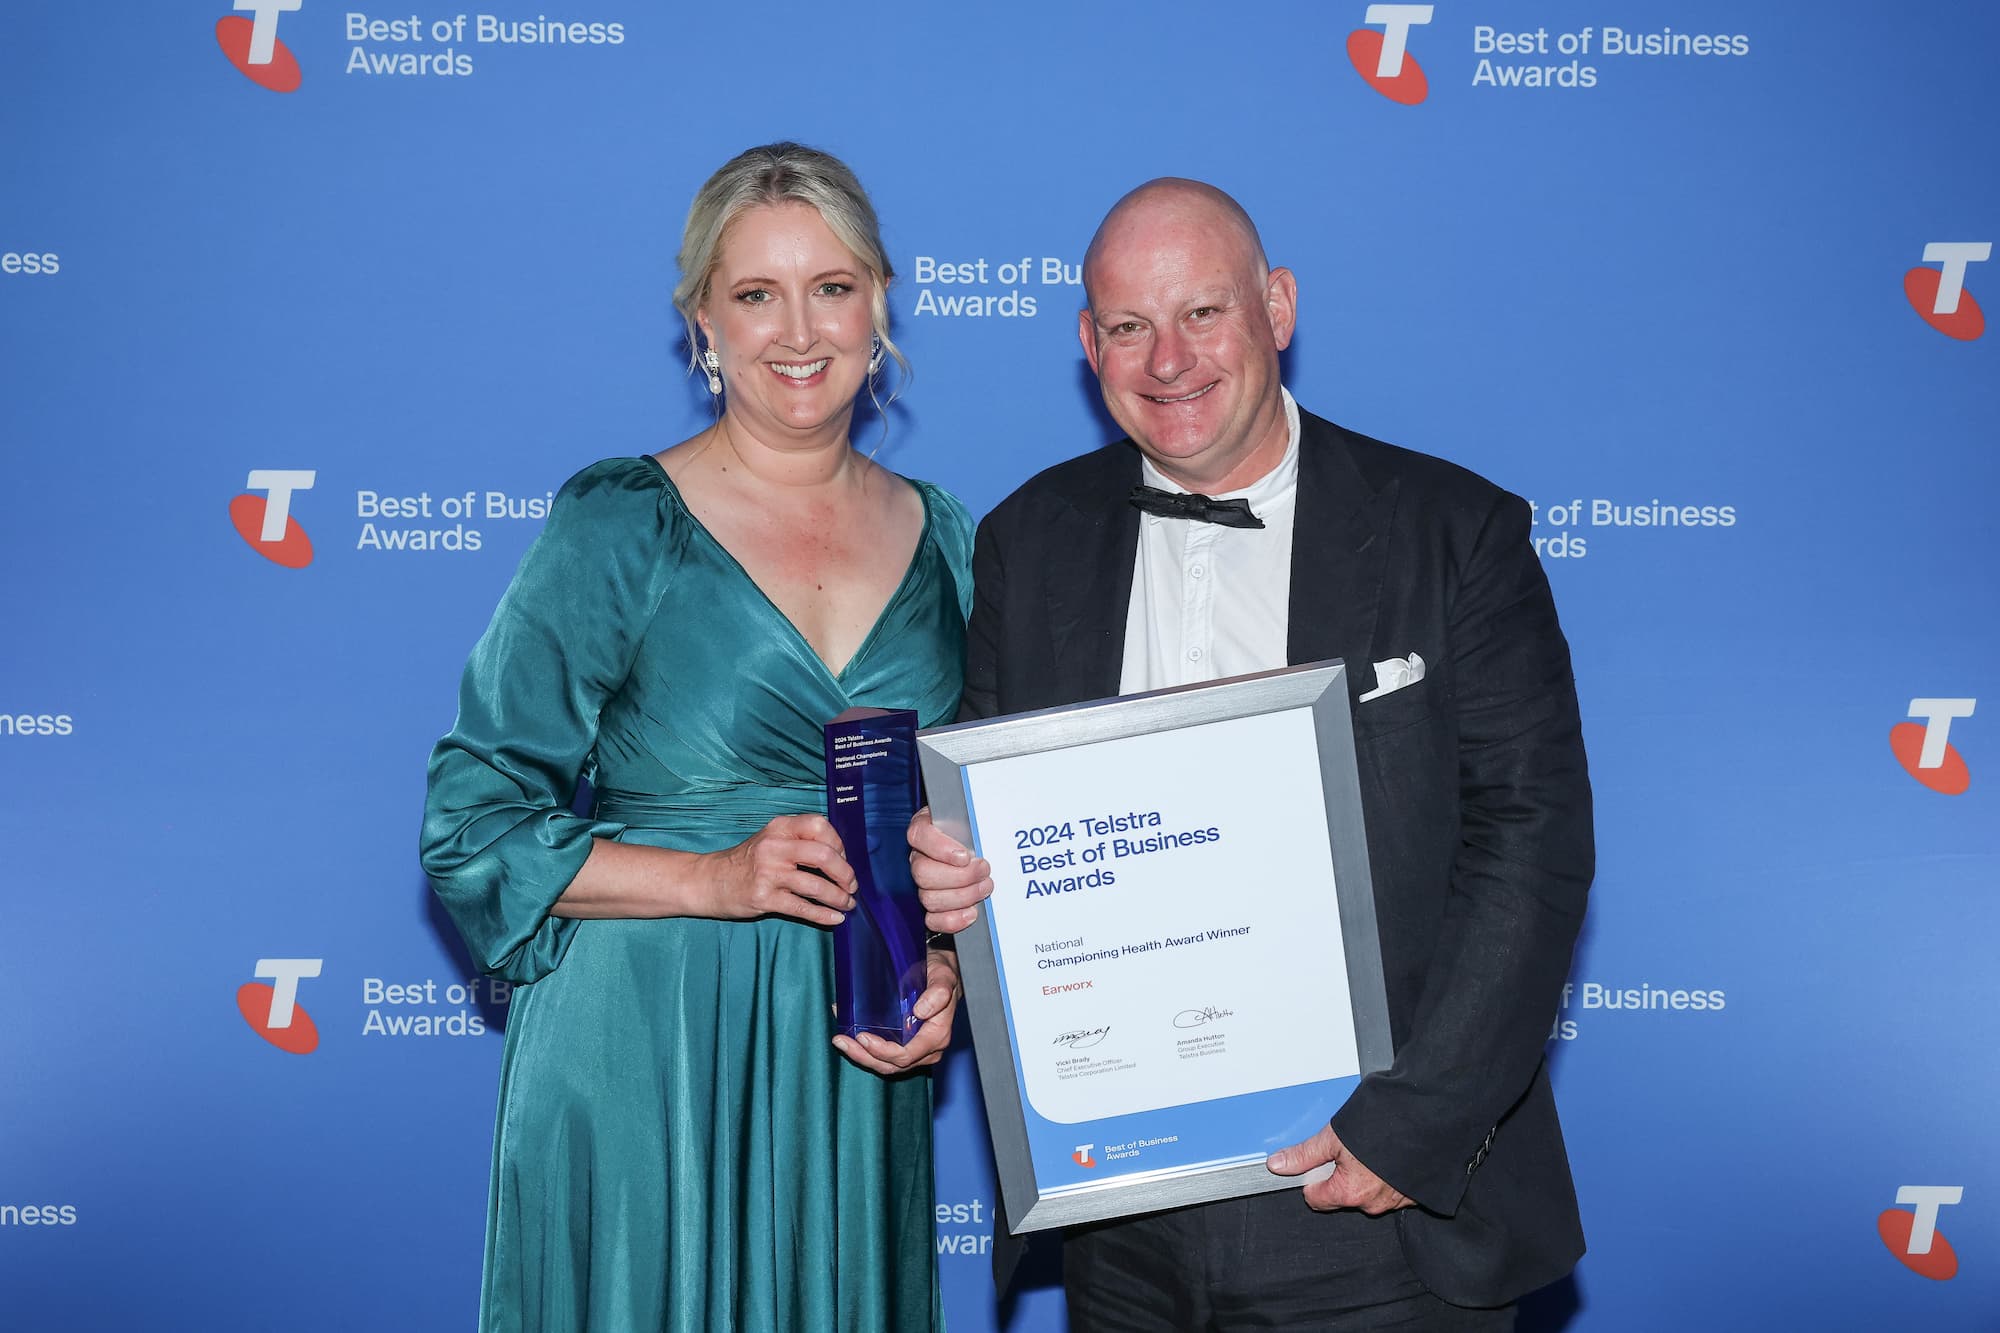 Telstra Best in Business - Championing Health Award 2024